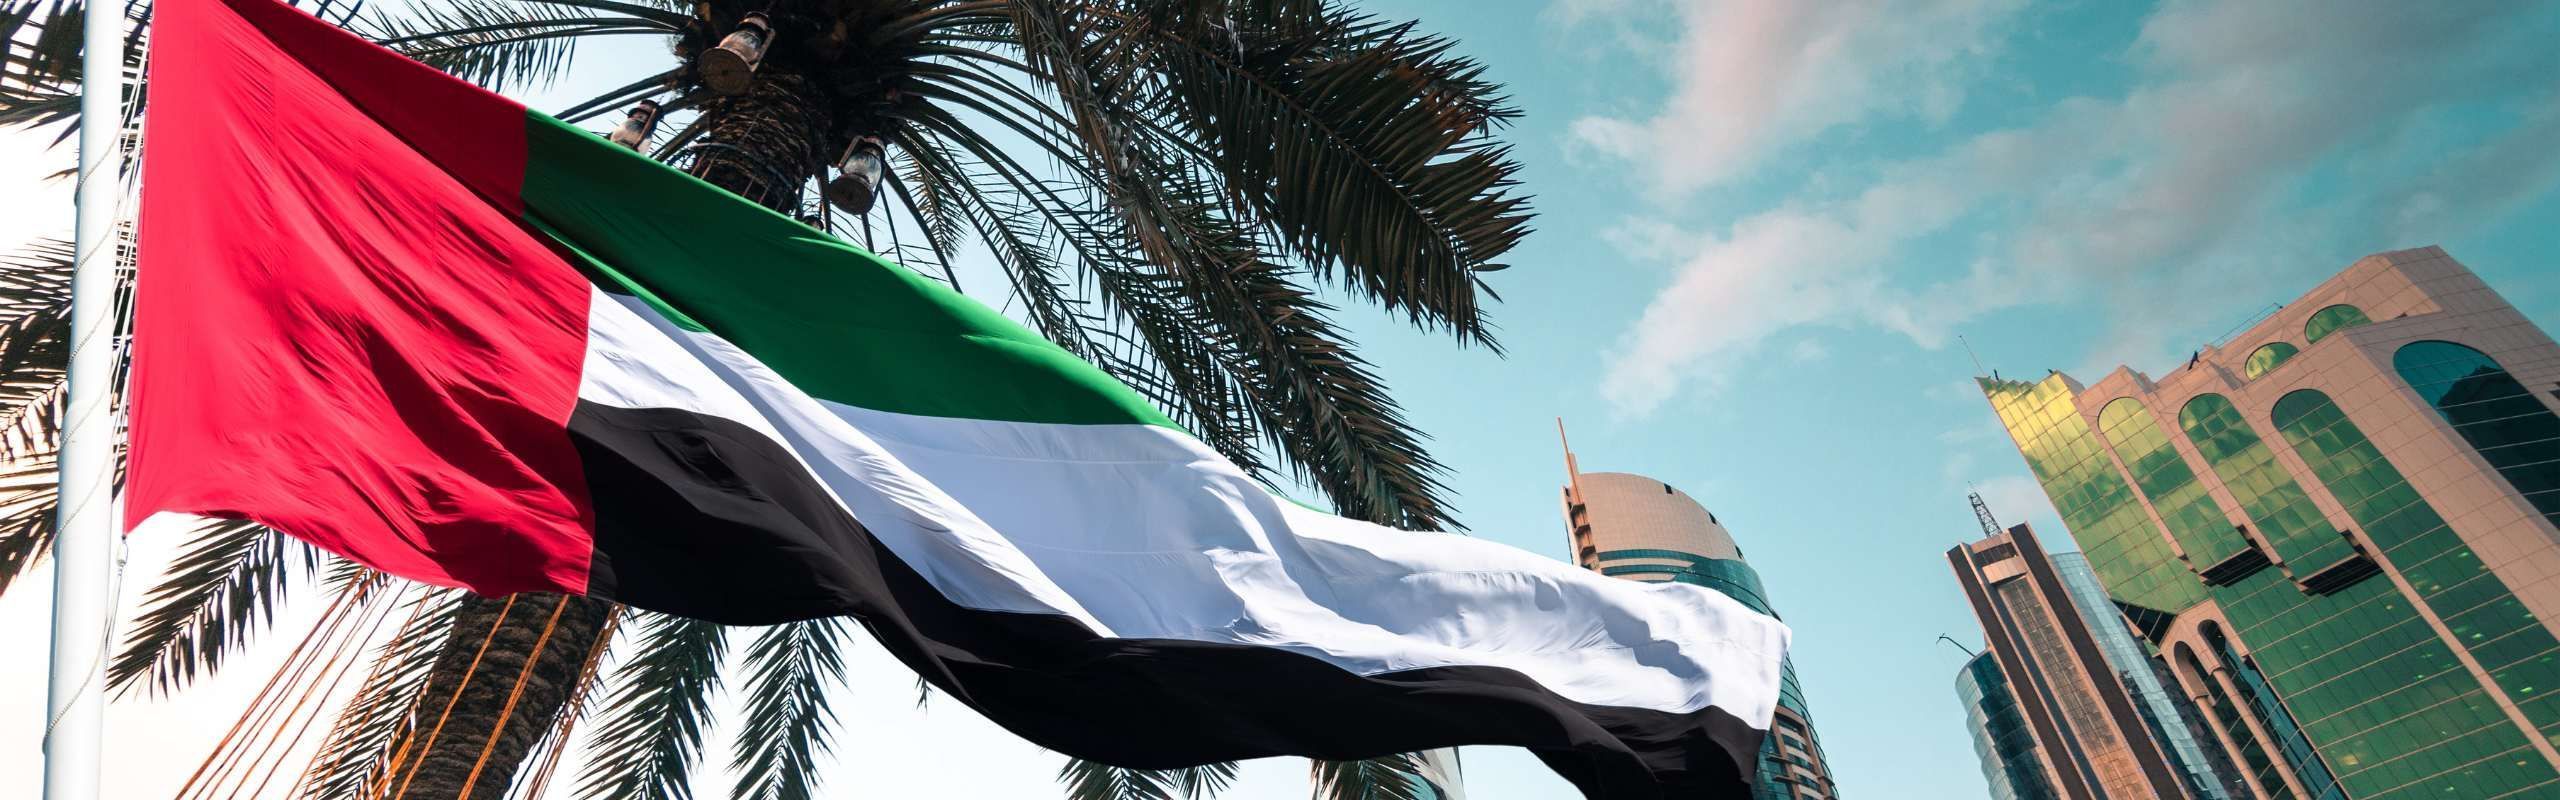 UAE flag against city skyline in Dubai